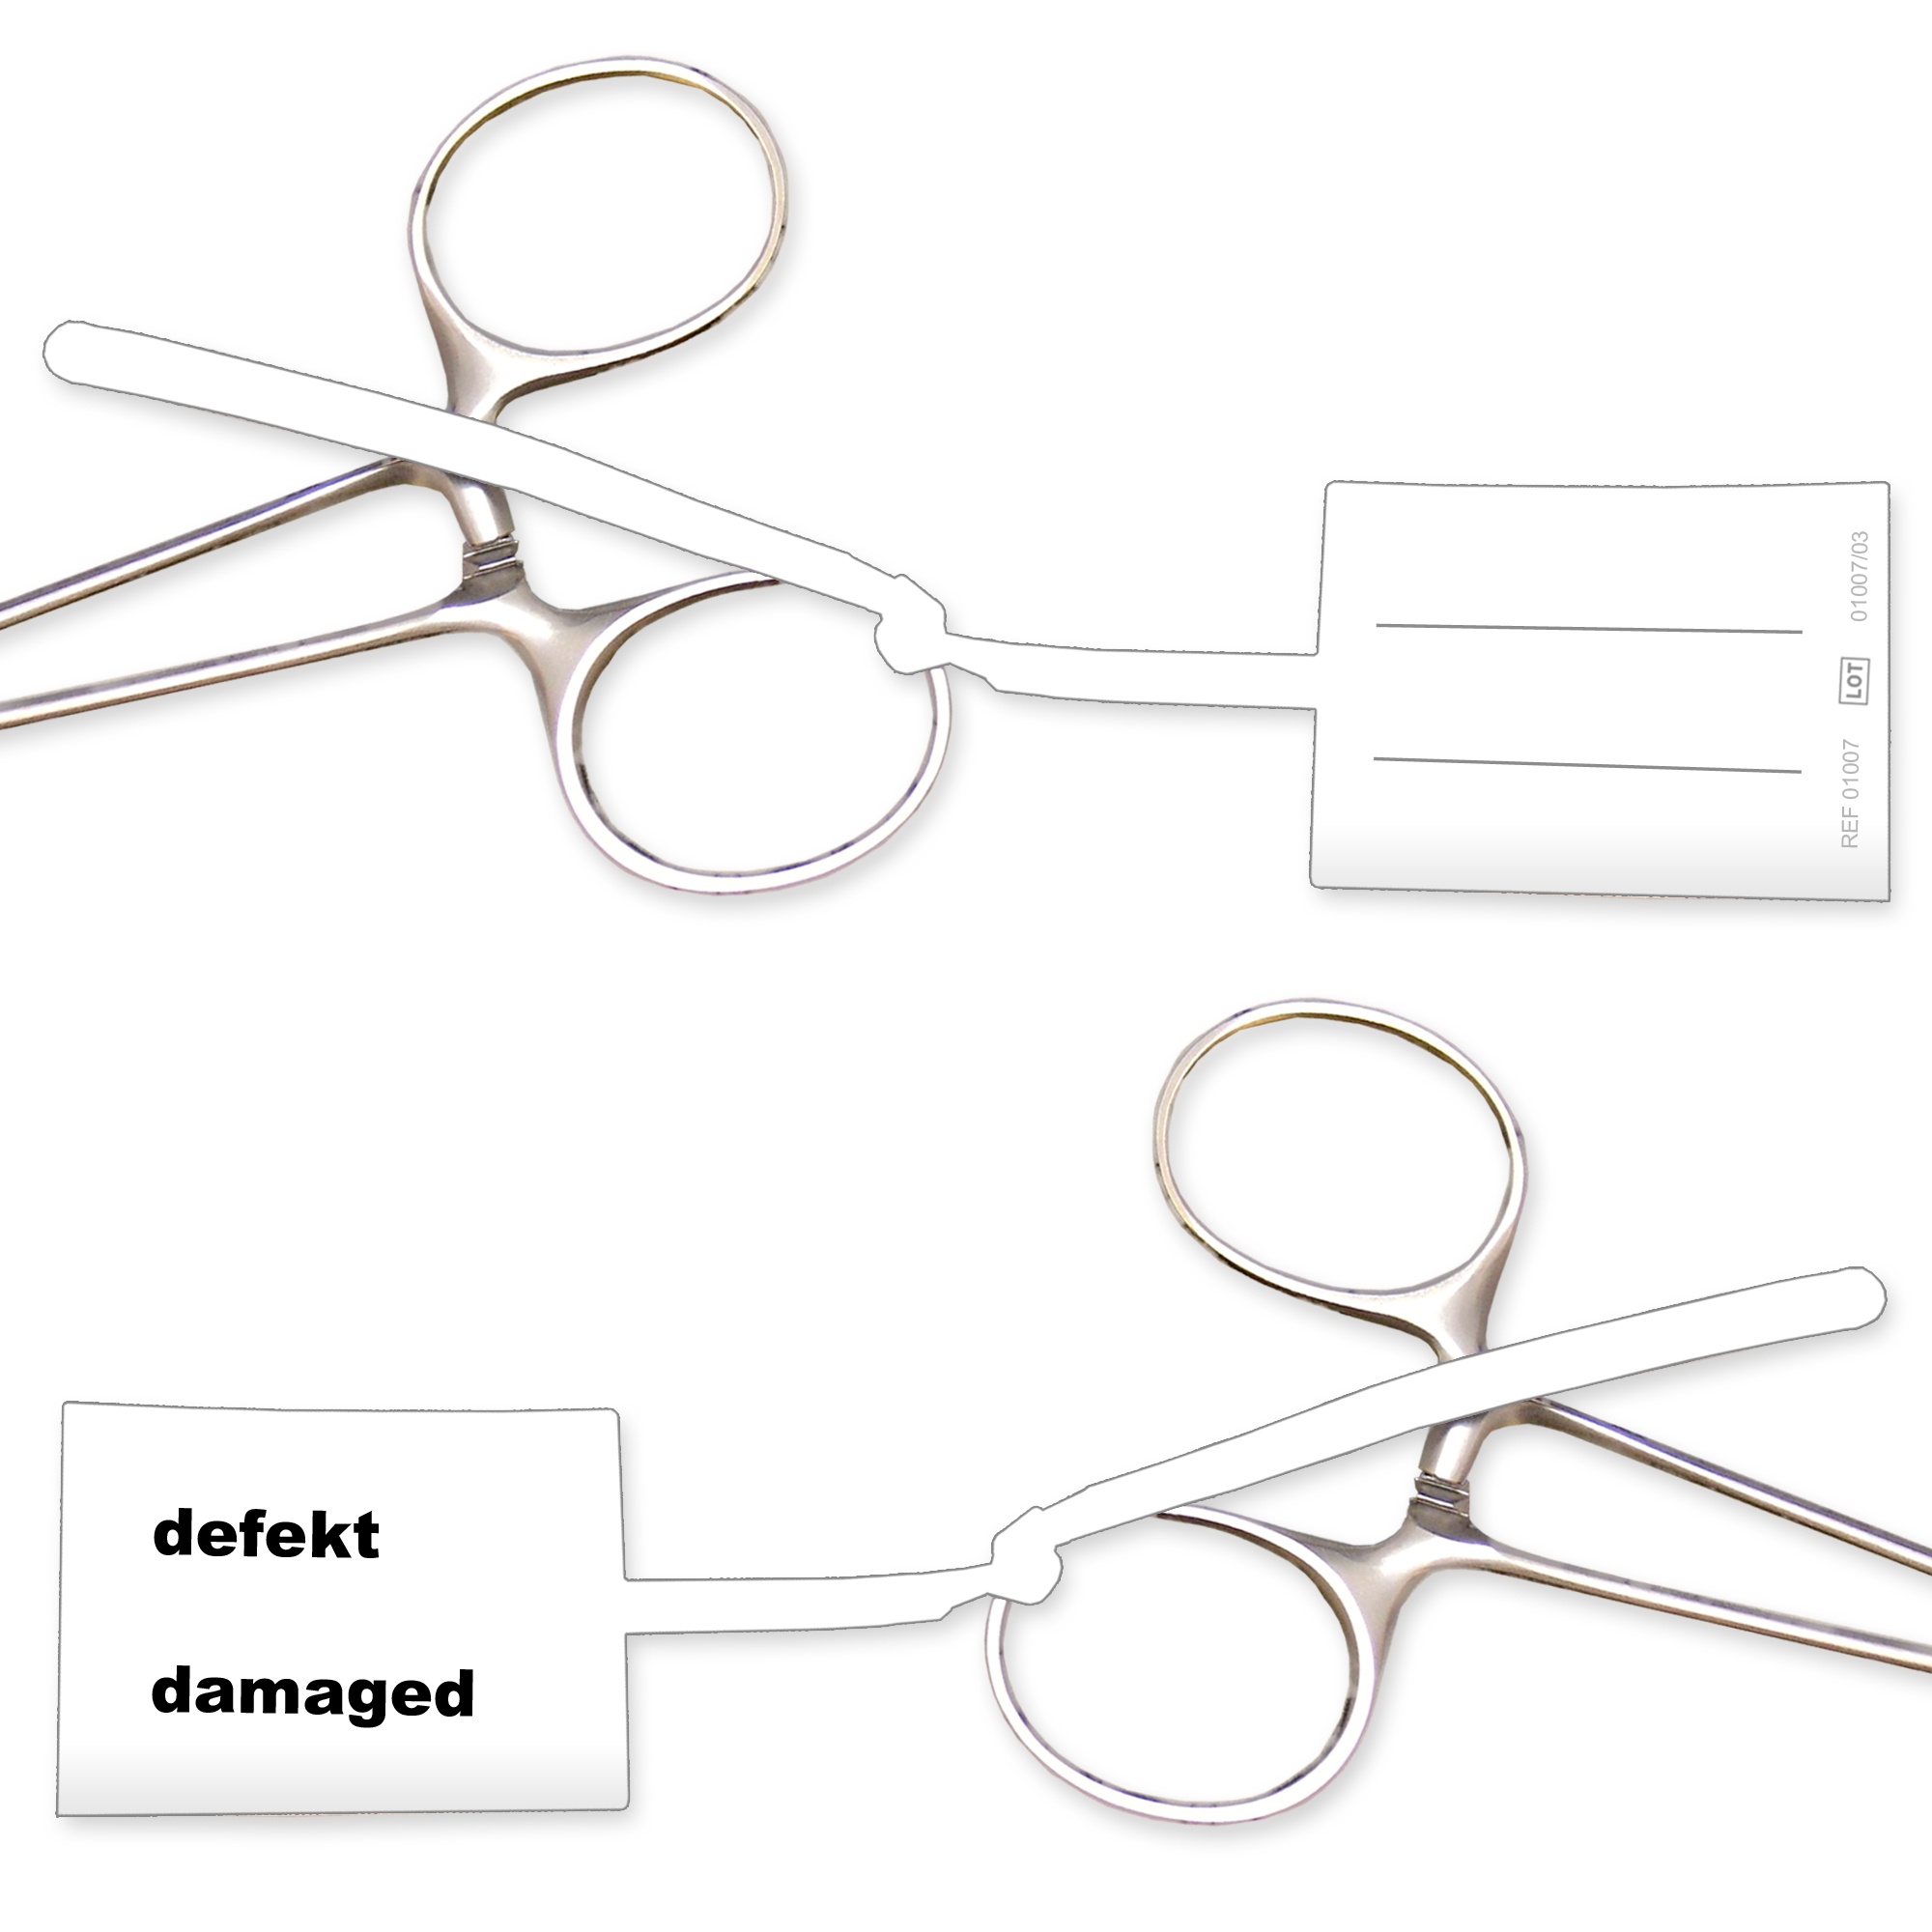 Repair tags "defekt / demaged" Image